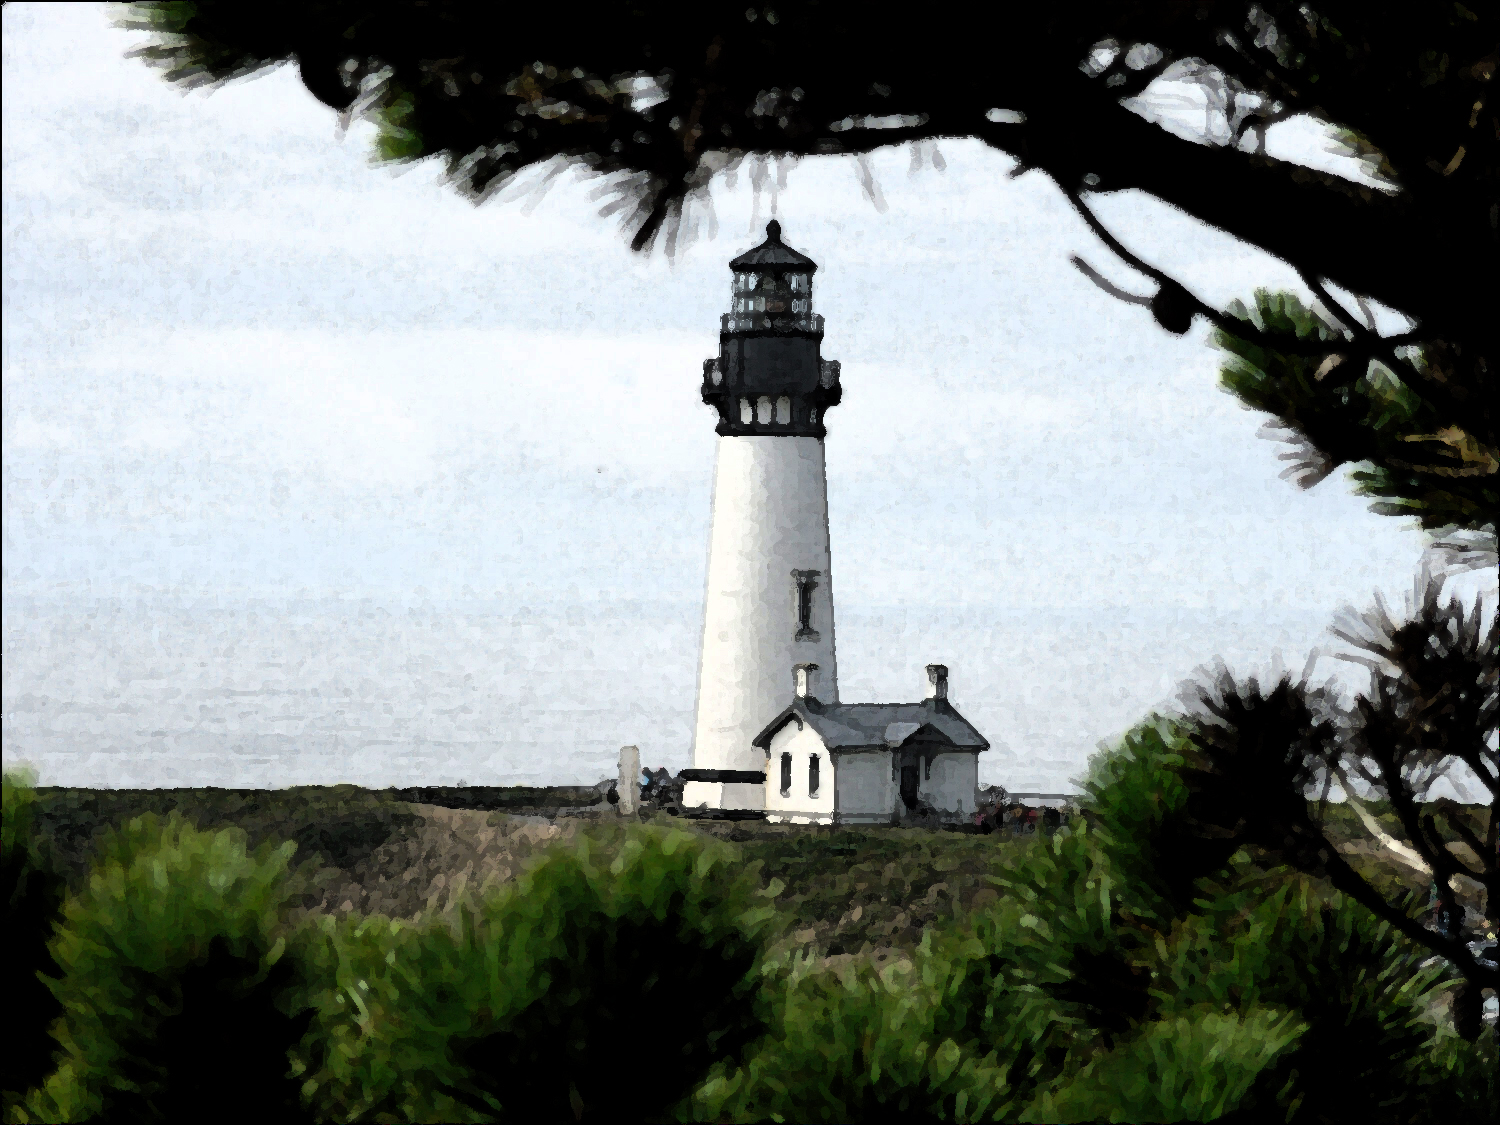 Newport, OR- Photos taken @ the Yaquina Head Lighthouse